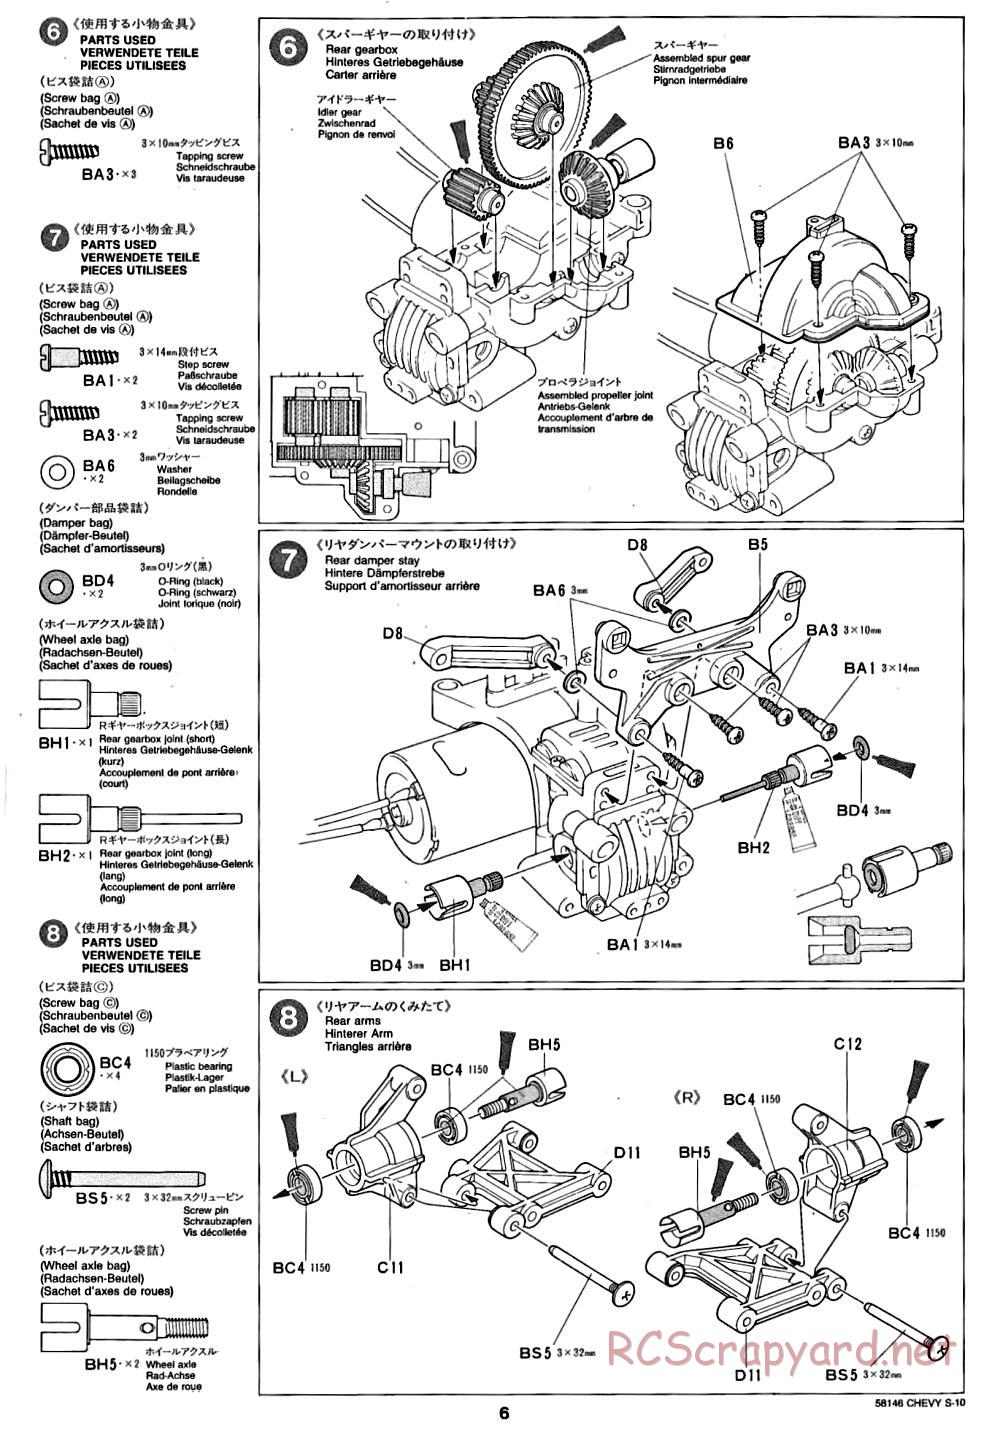 Tamiya - Chevy S-10 Chassis - Manual - Page 6